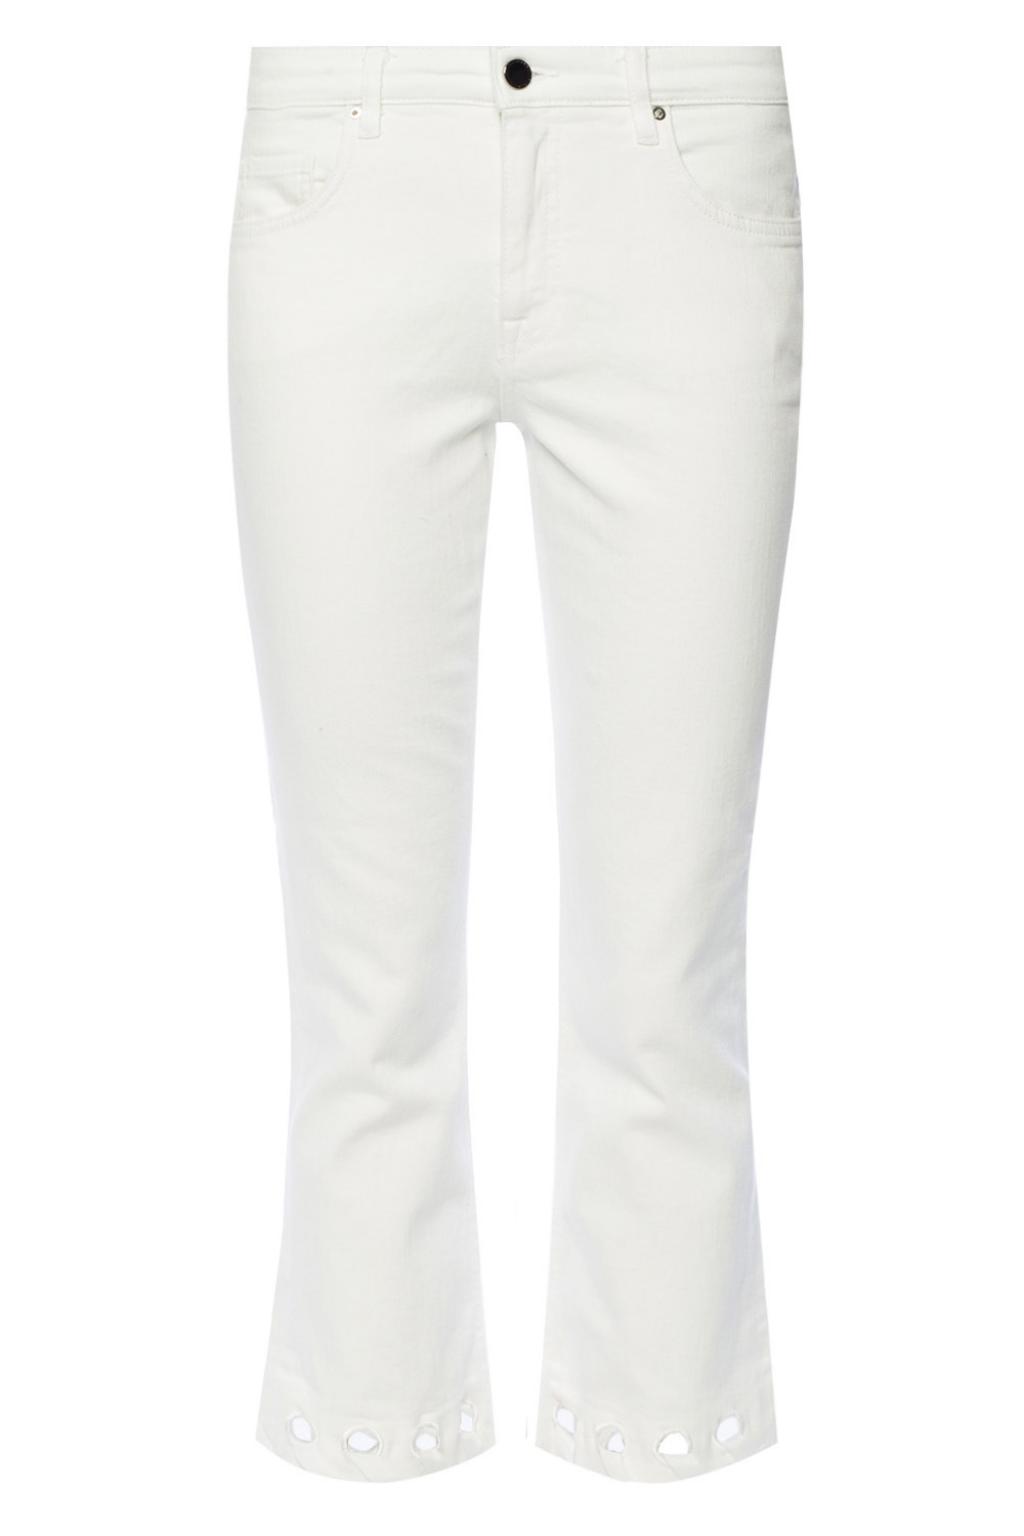 victoria beckham white jeans